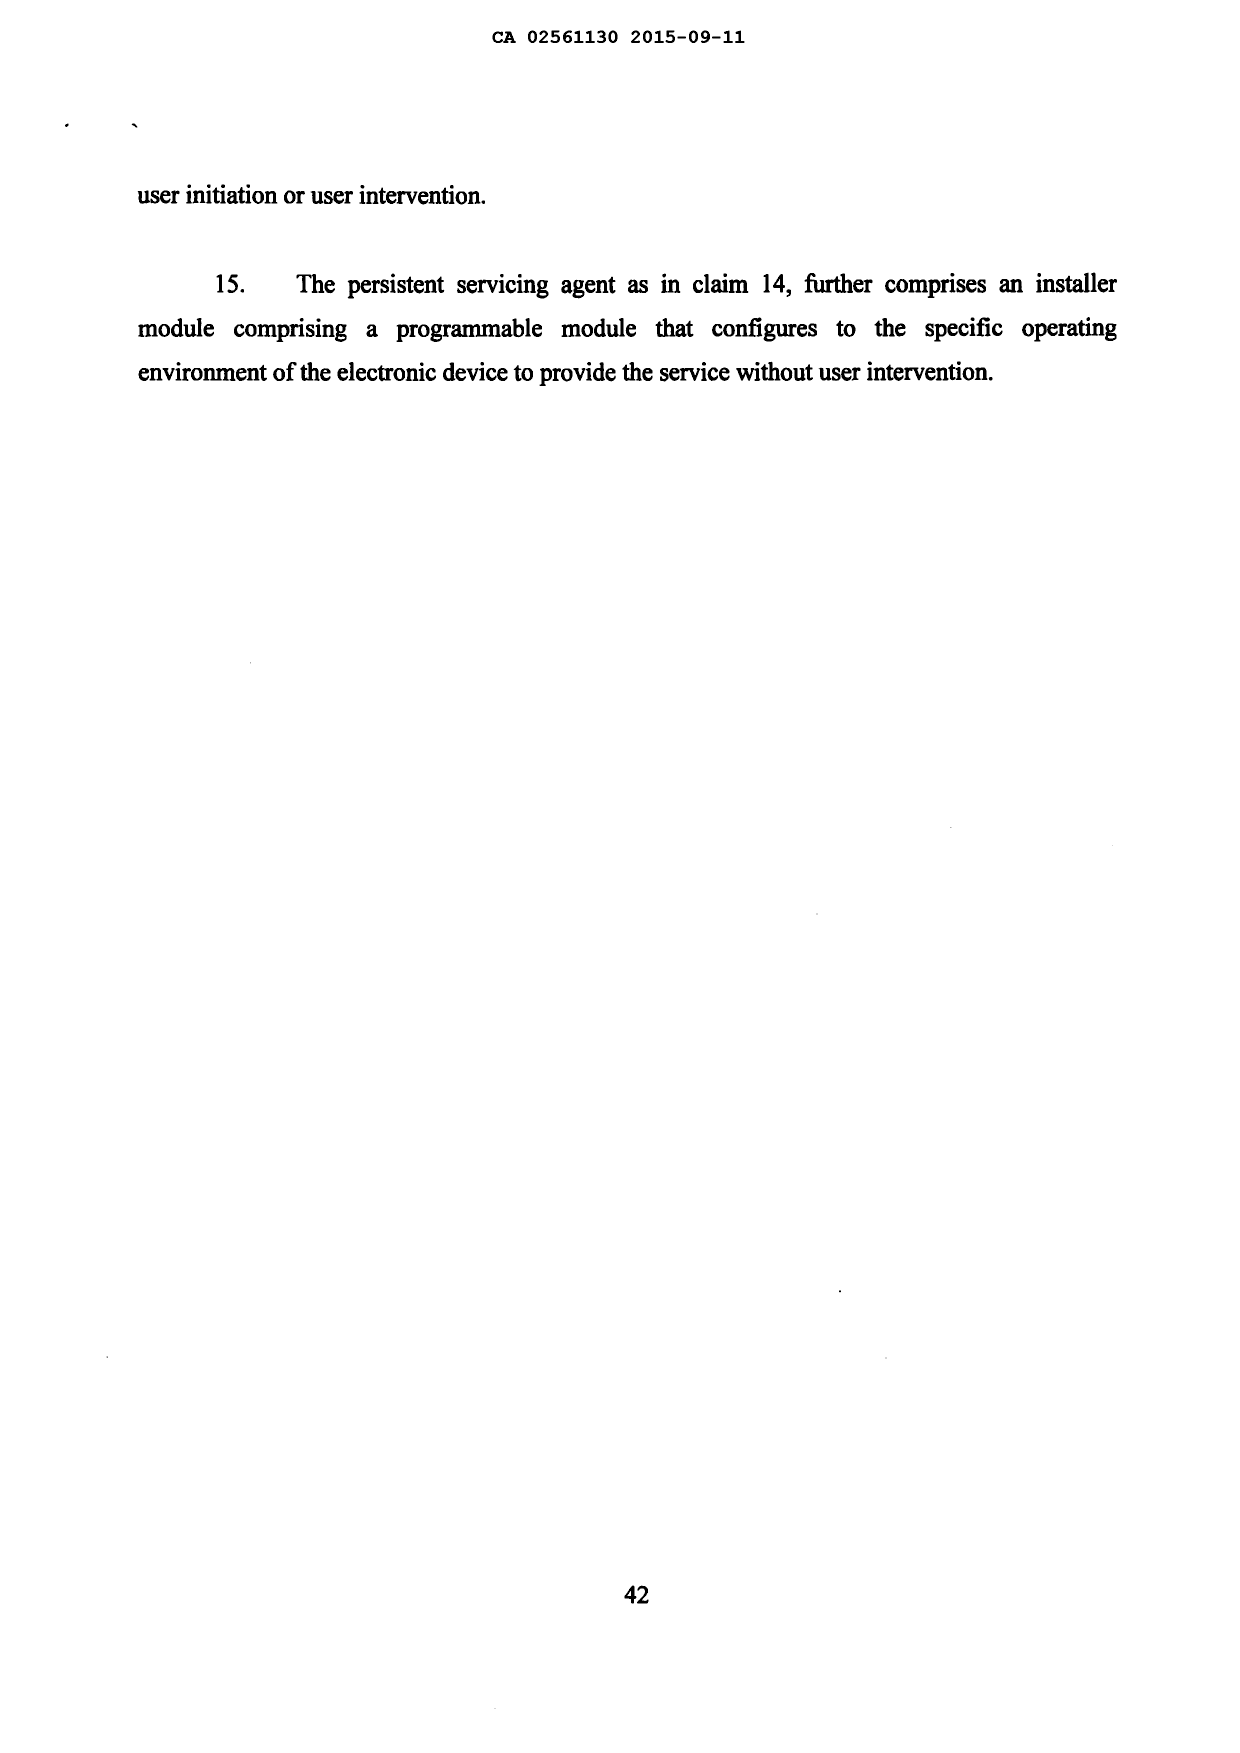 Canadian Patent Document 2561130. Amendment 20150911. Image 7 of 7